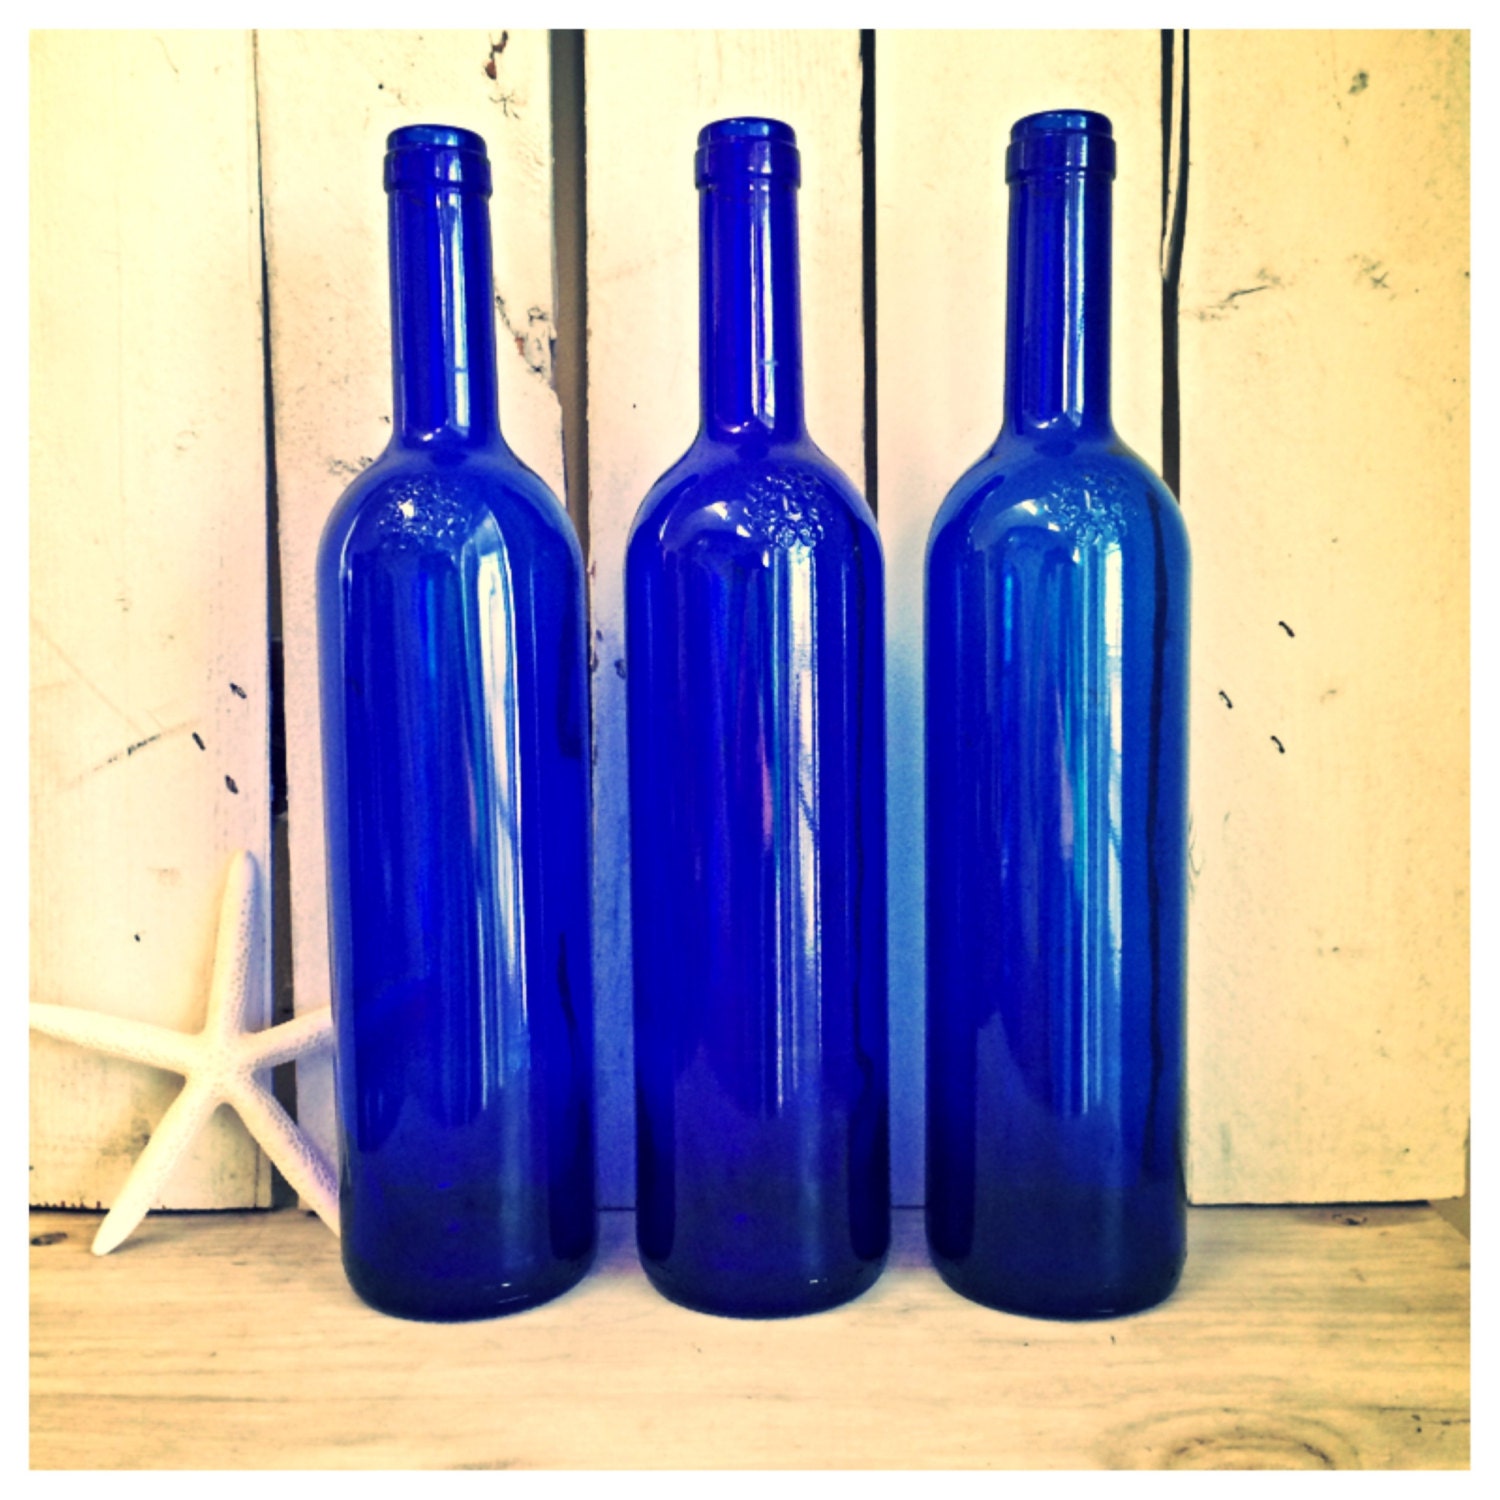 SALE Three cobalt blue glass bottles blue supply bottles